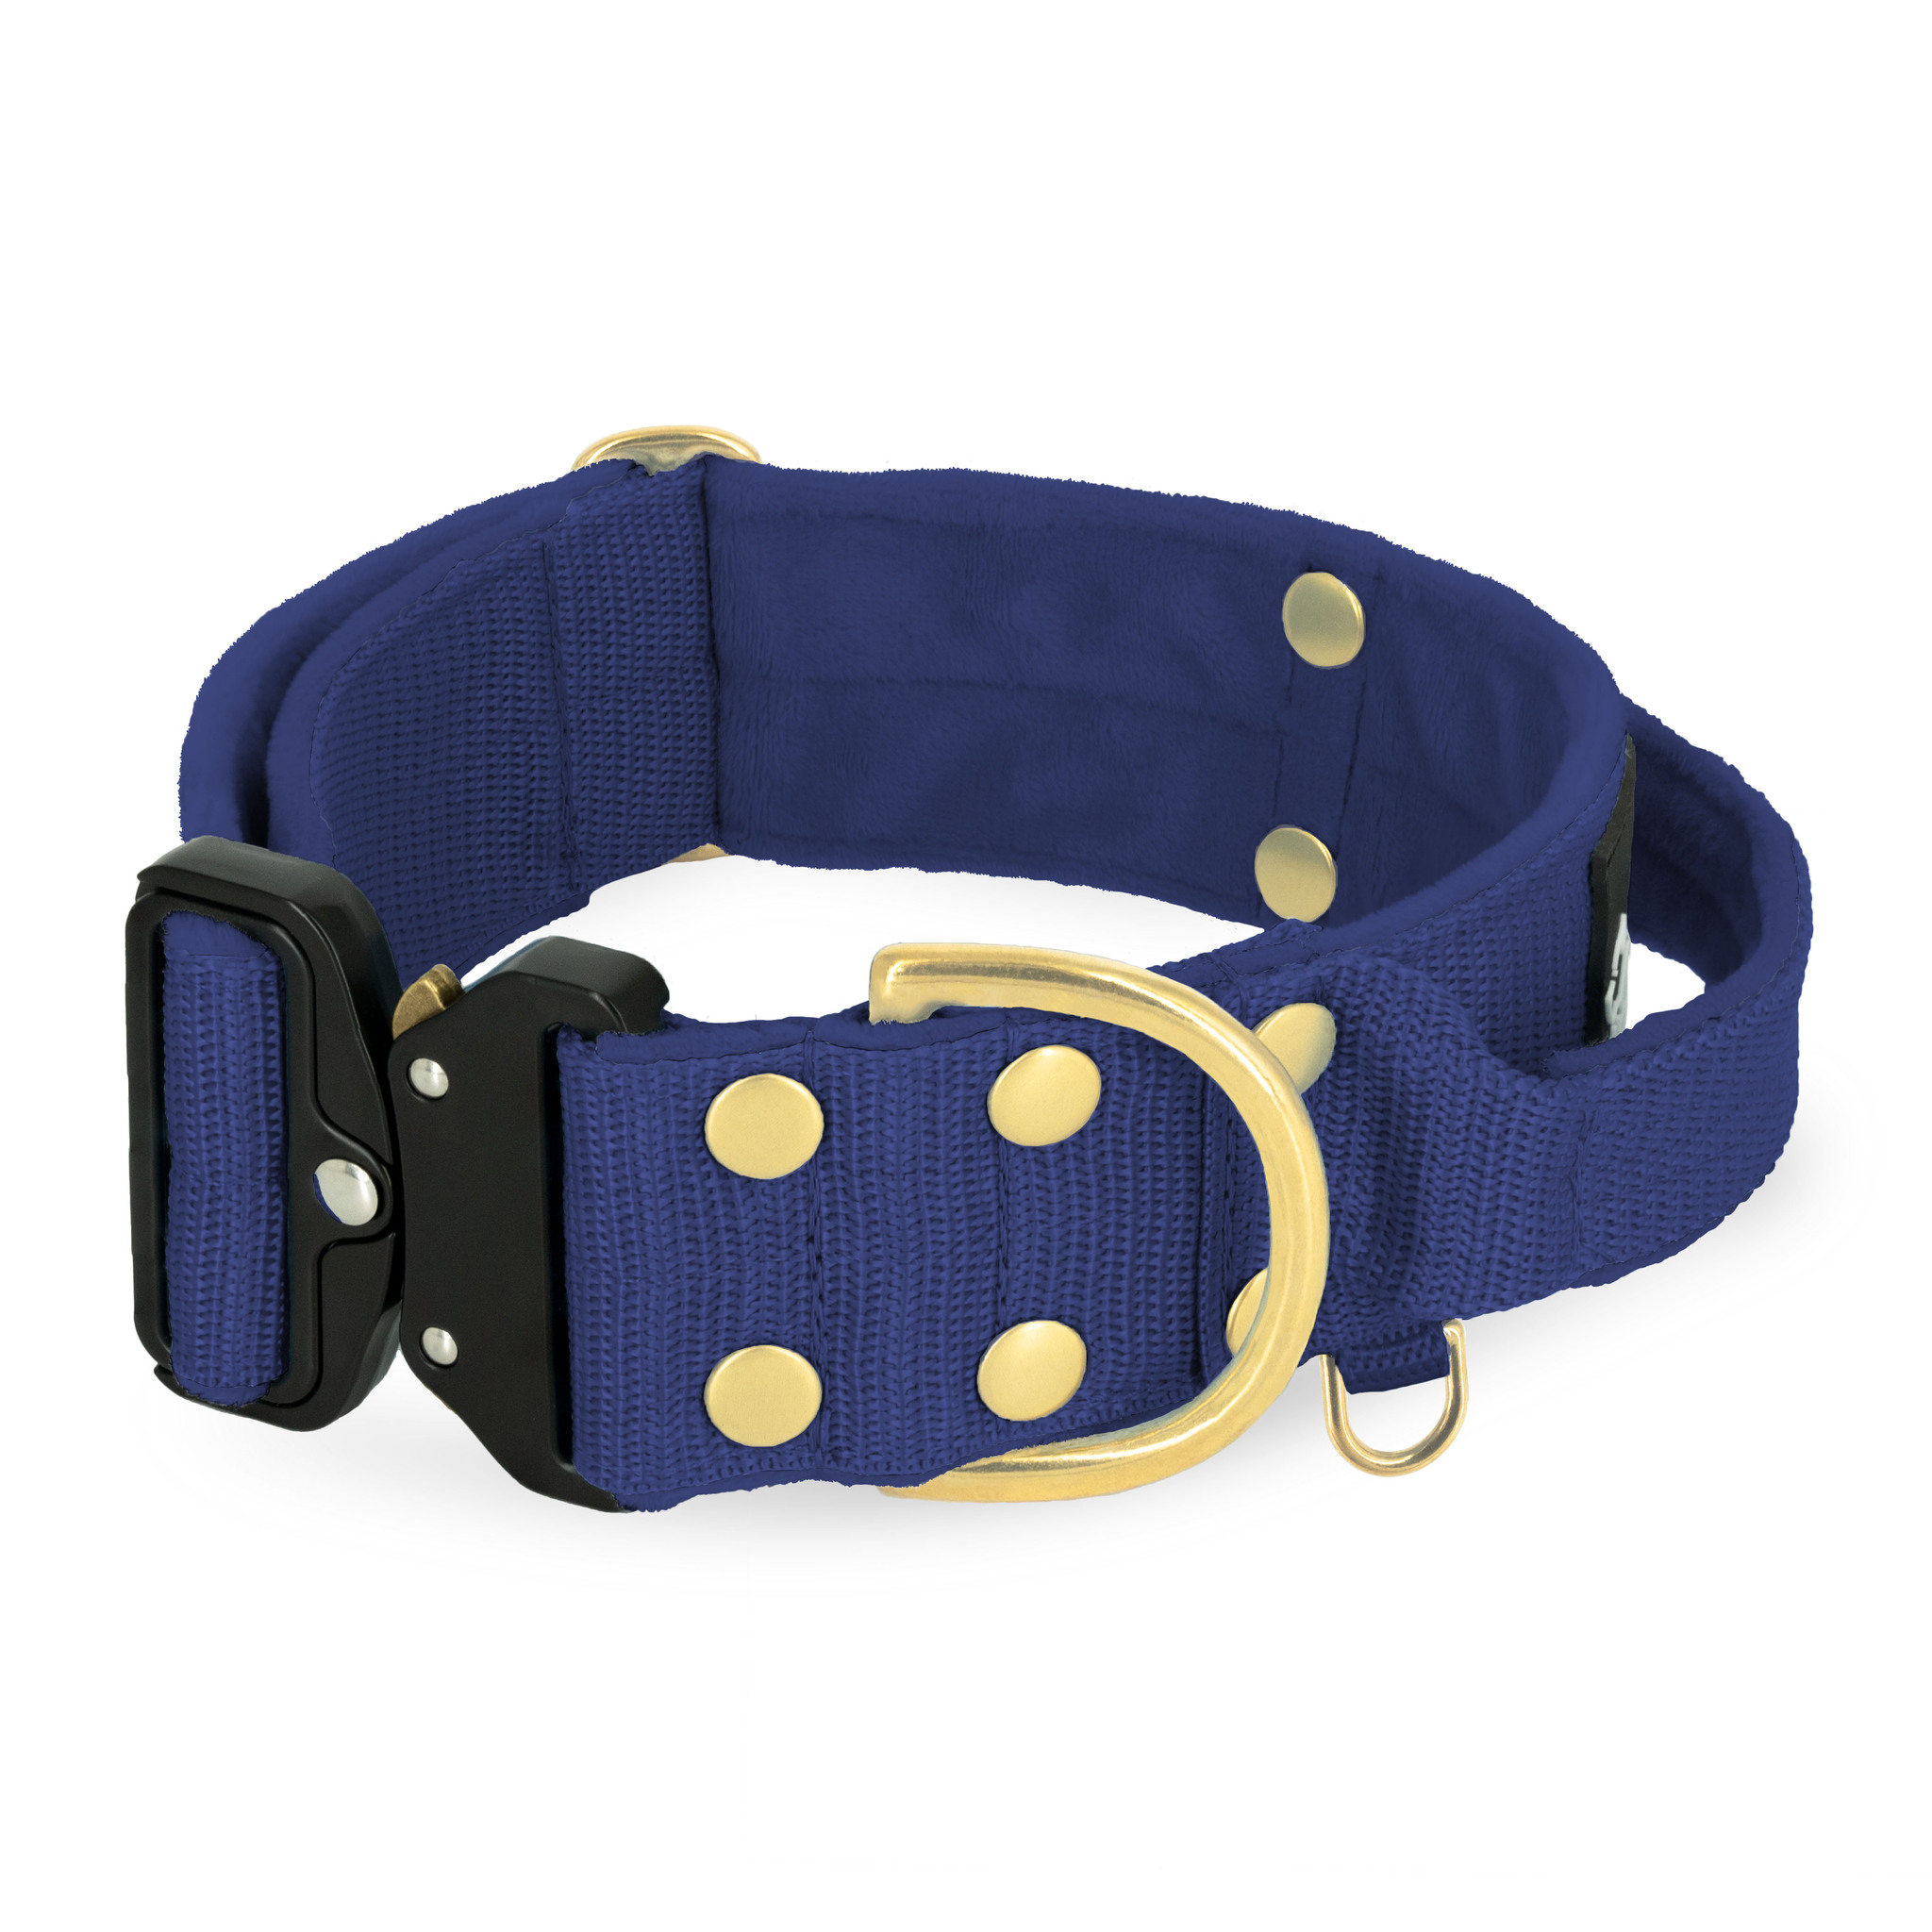 Extreme Buckle Golden Navy Blue - Starkt och säkert halsband